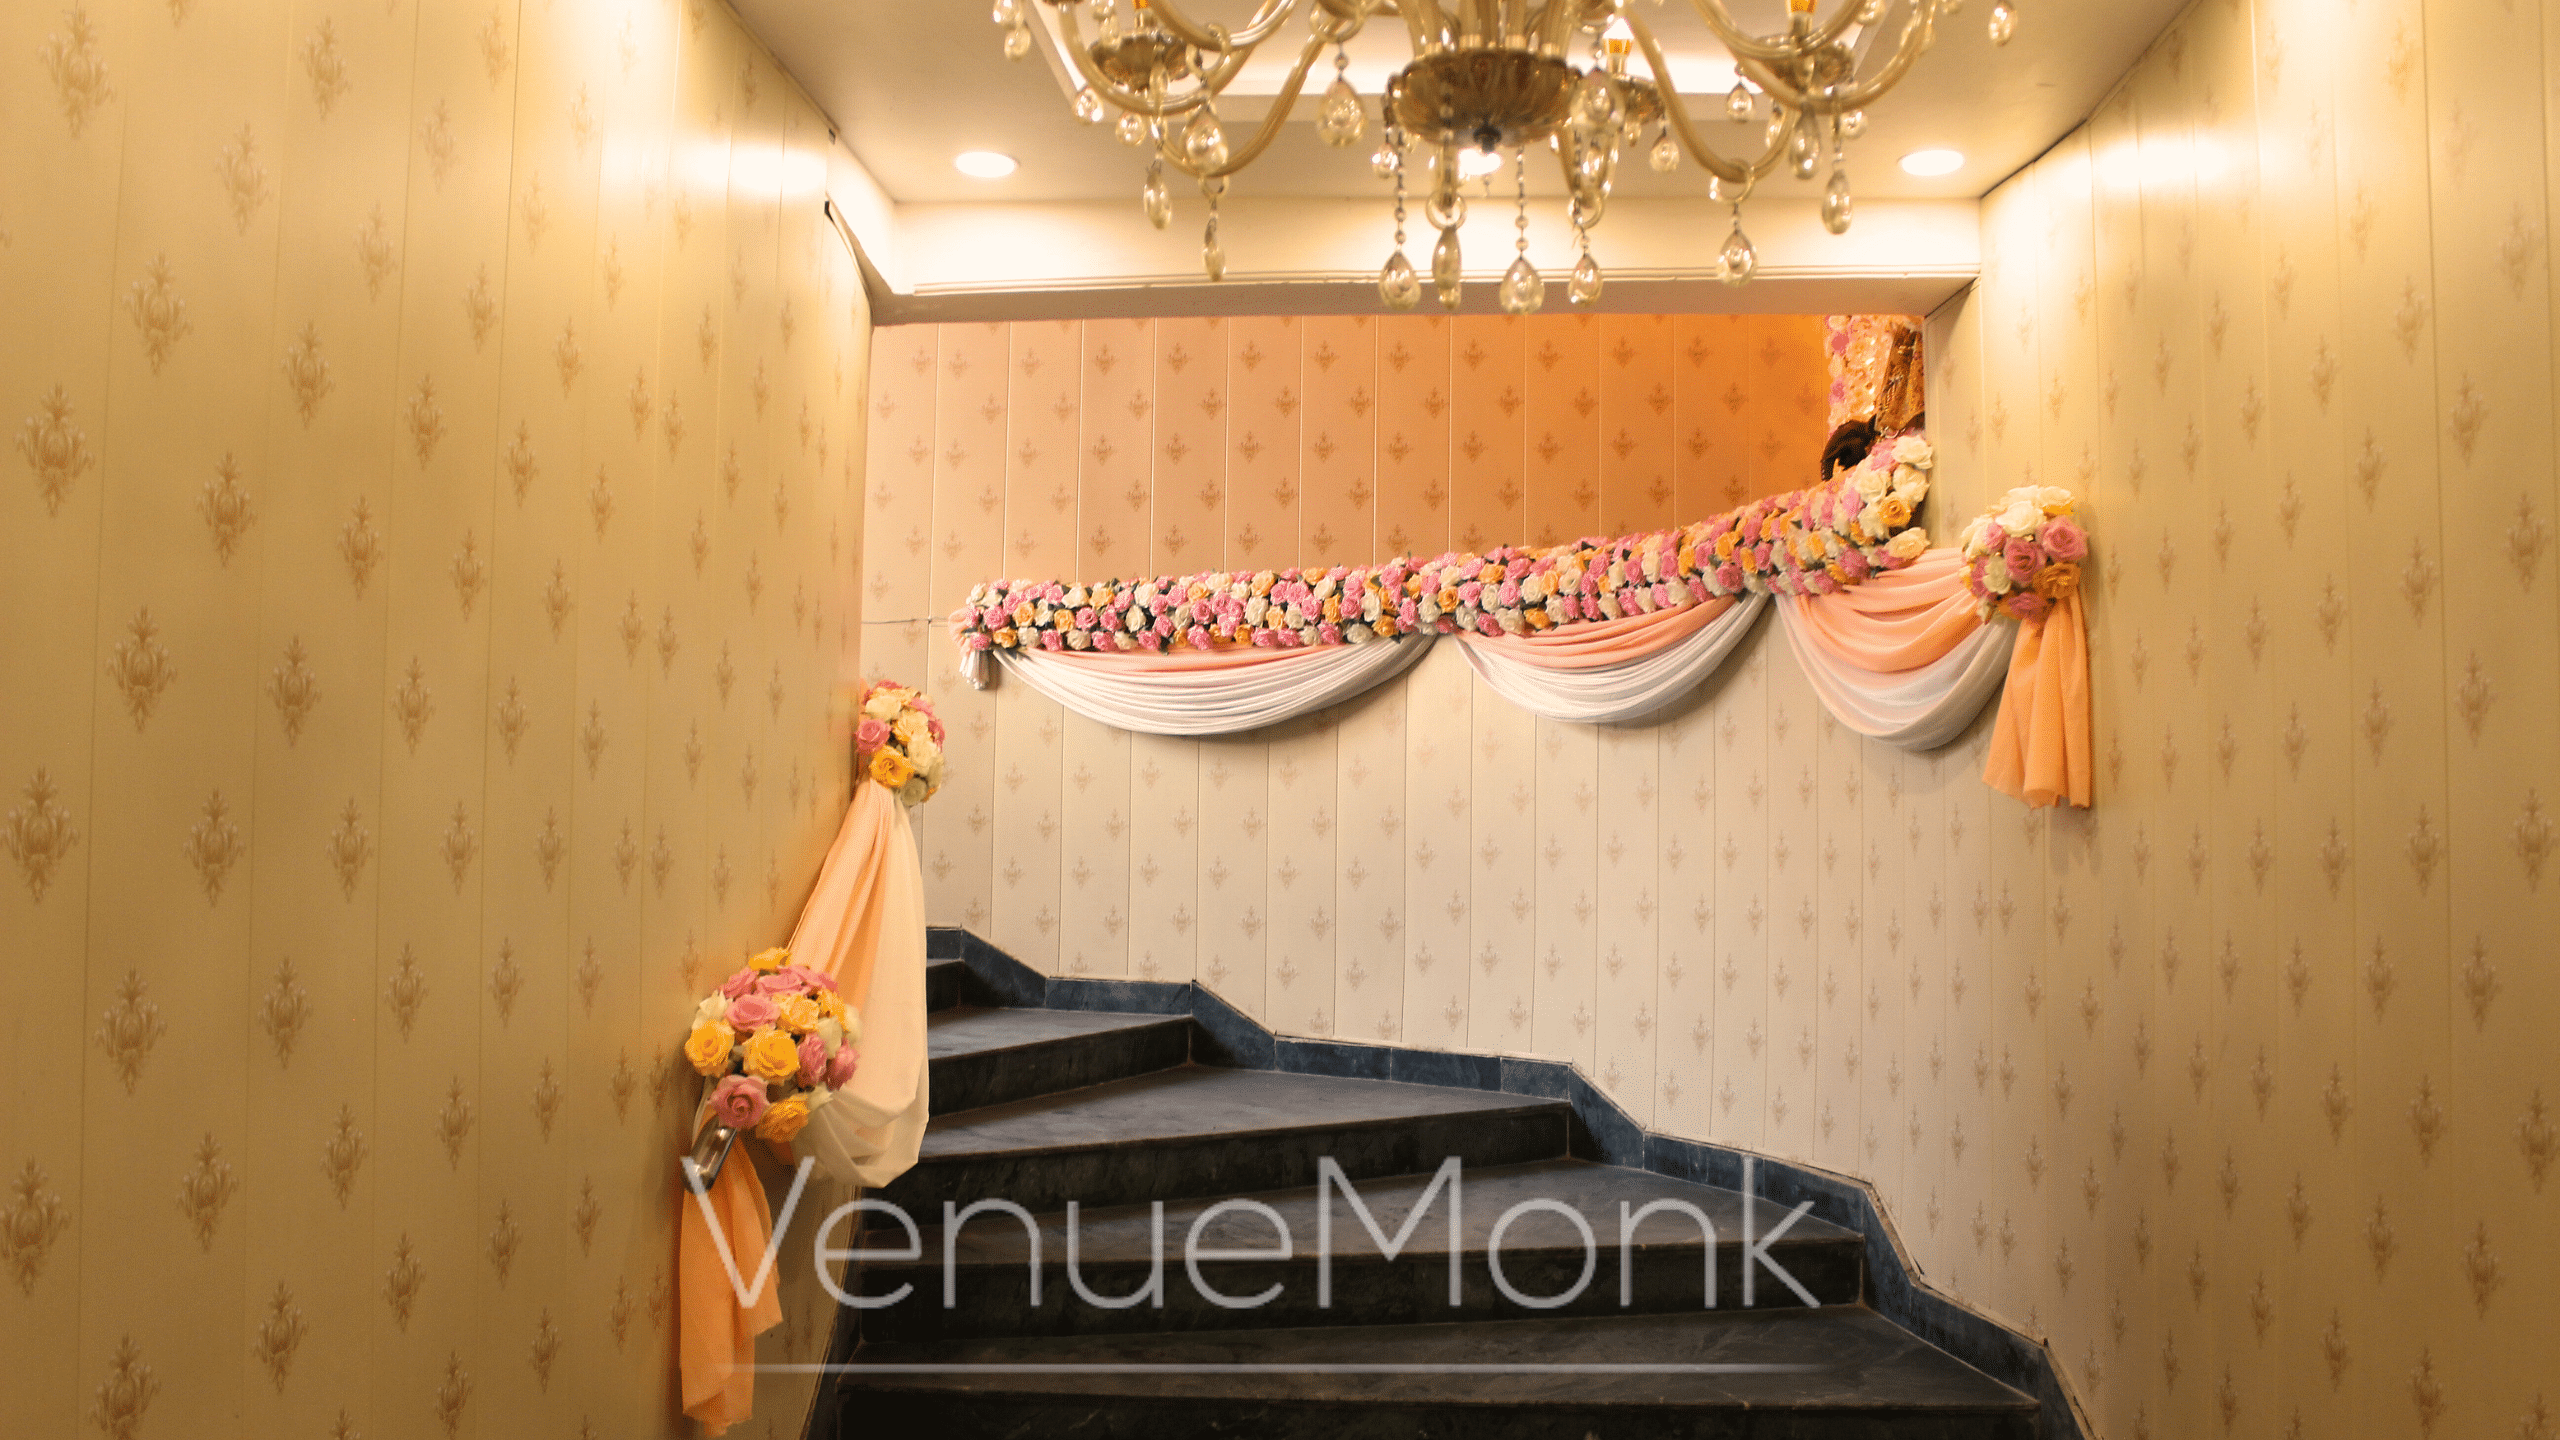 Kashish Hotel Banquet in Sector 26, Noida